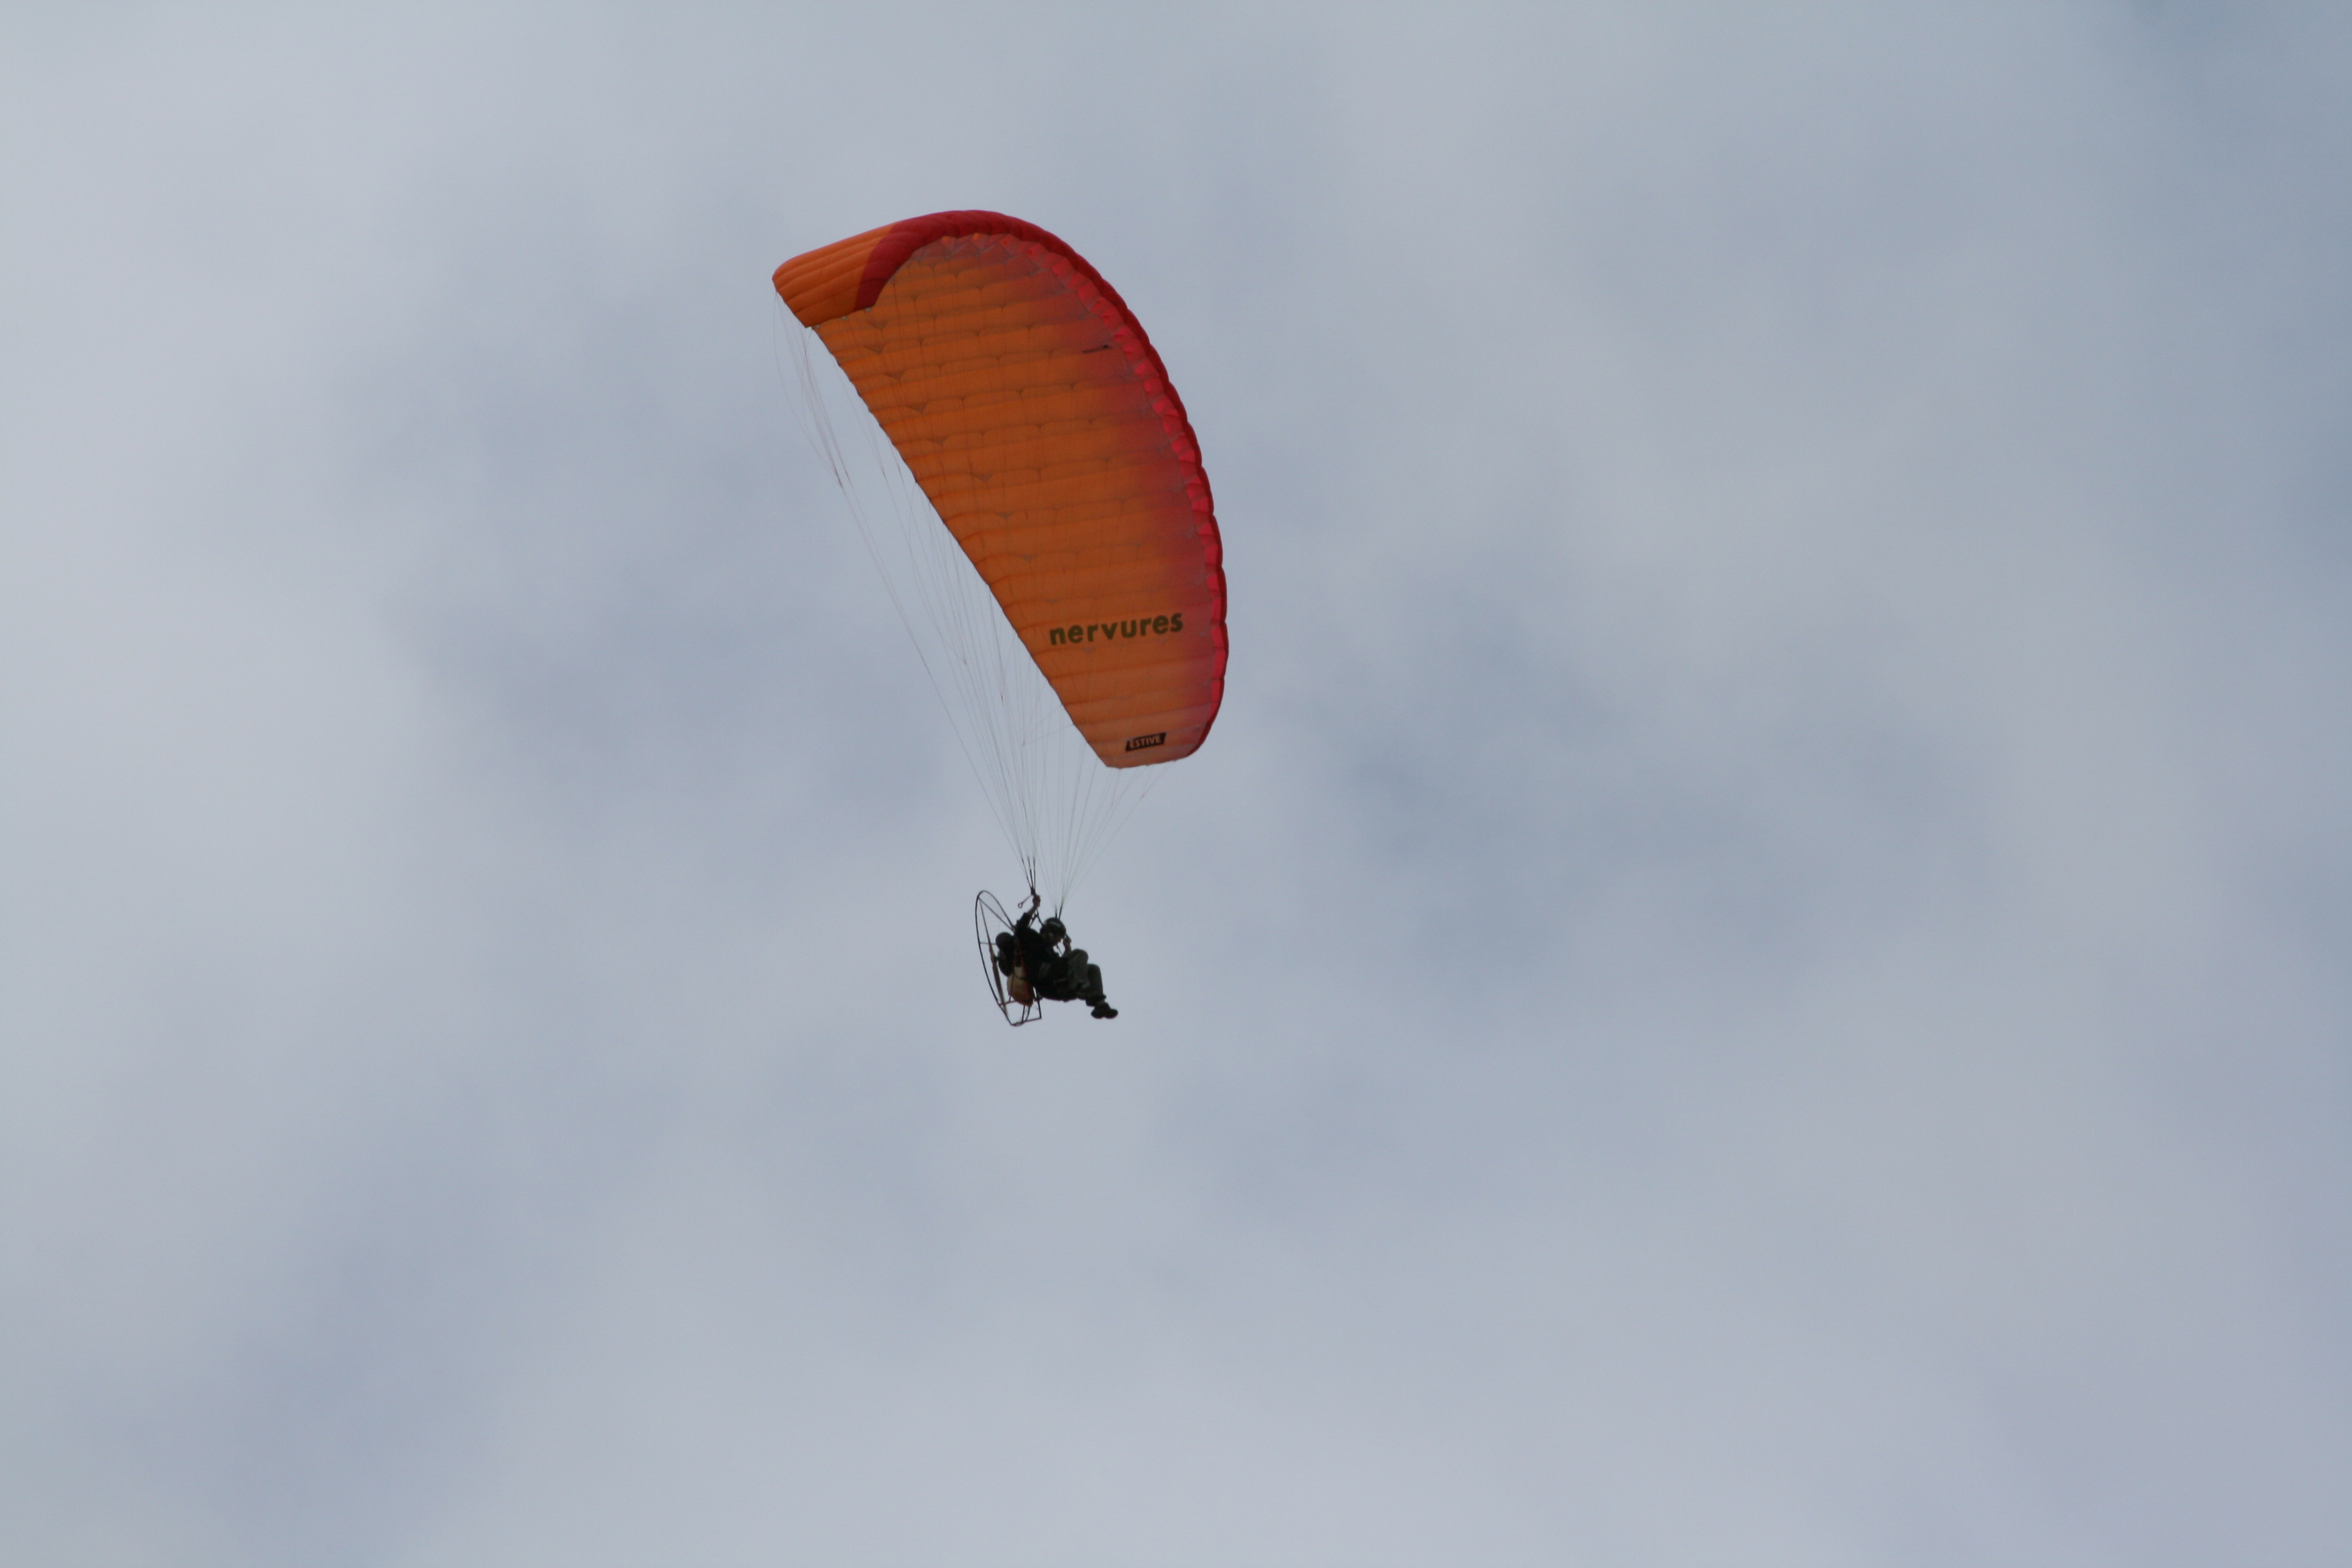 bozzit parapente parachute wing motor pilot vehicles air ultralight